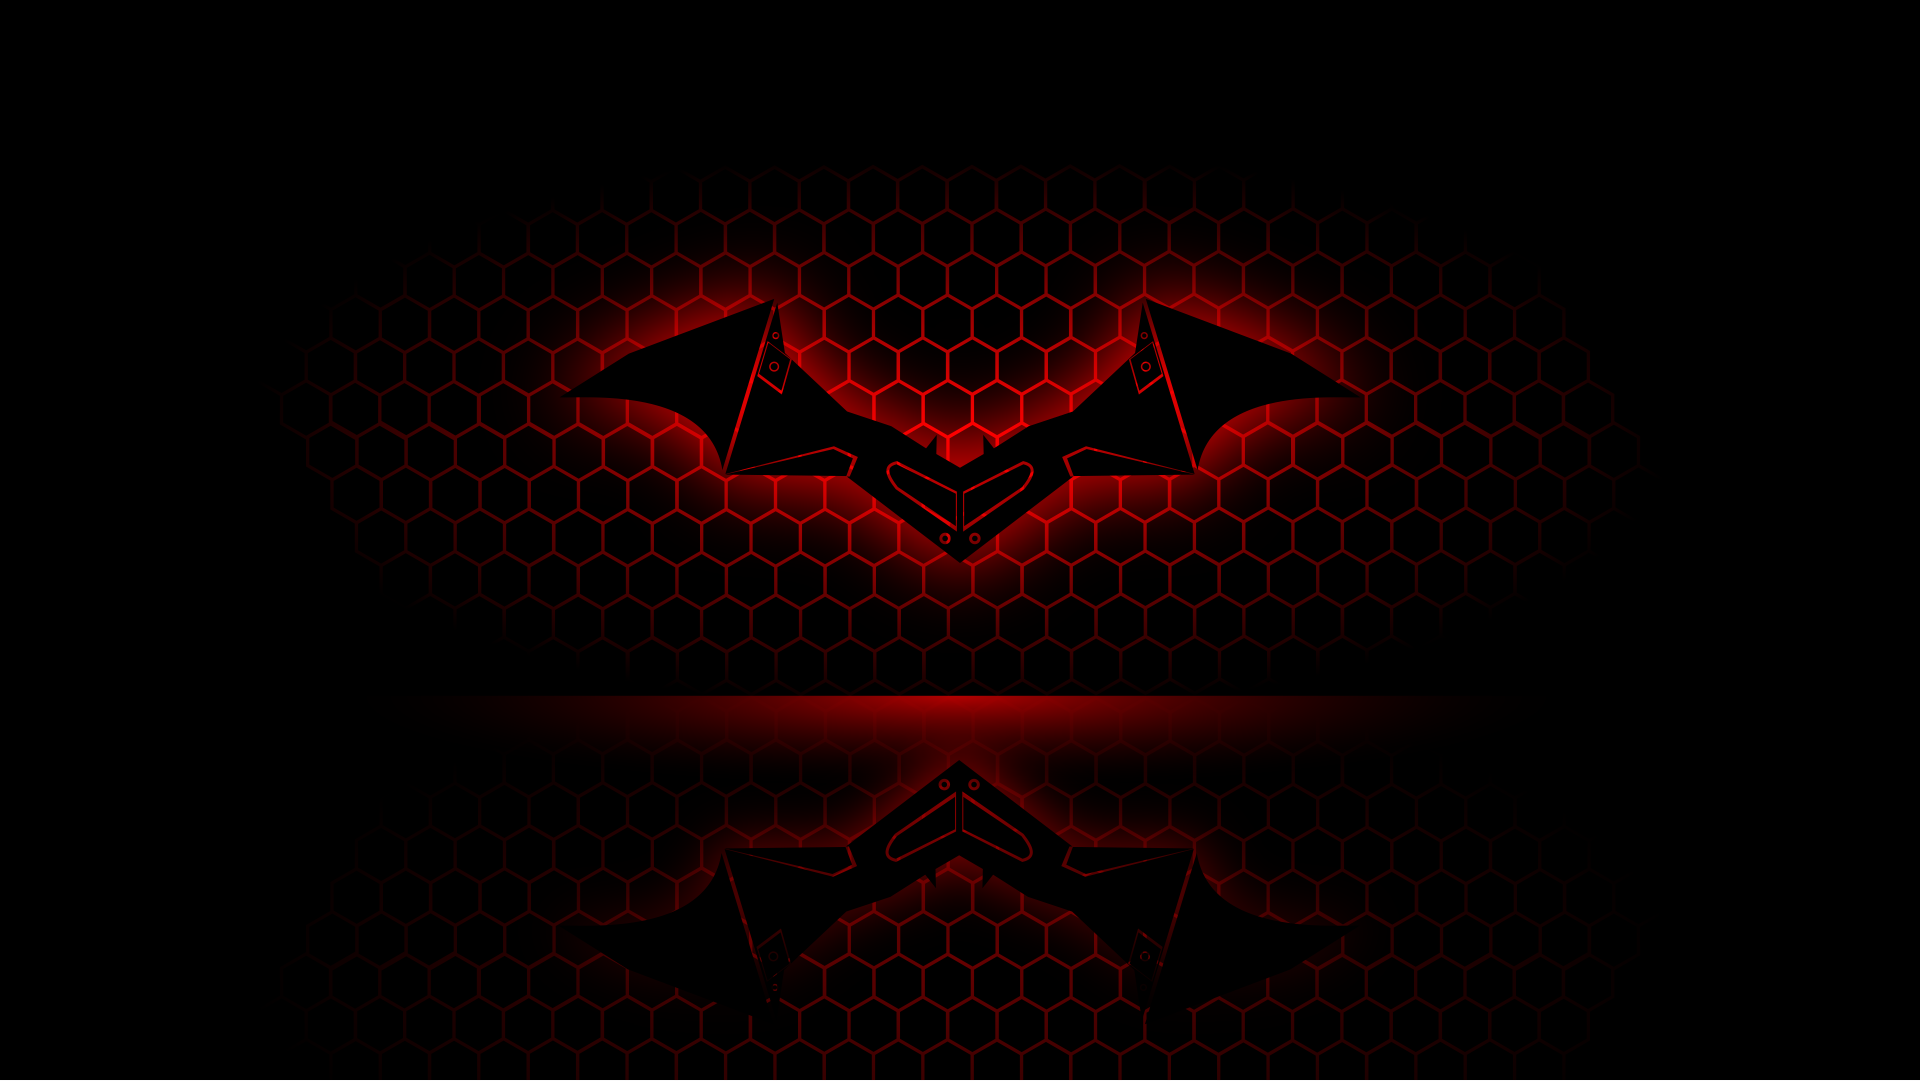 The Batman Logo Wallpaper By TheKnight